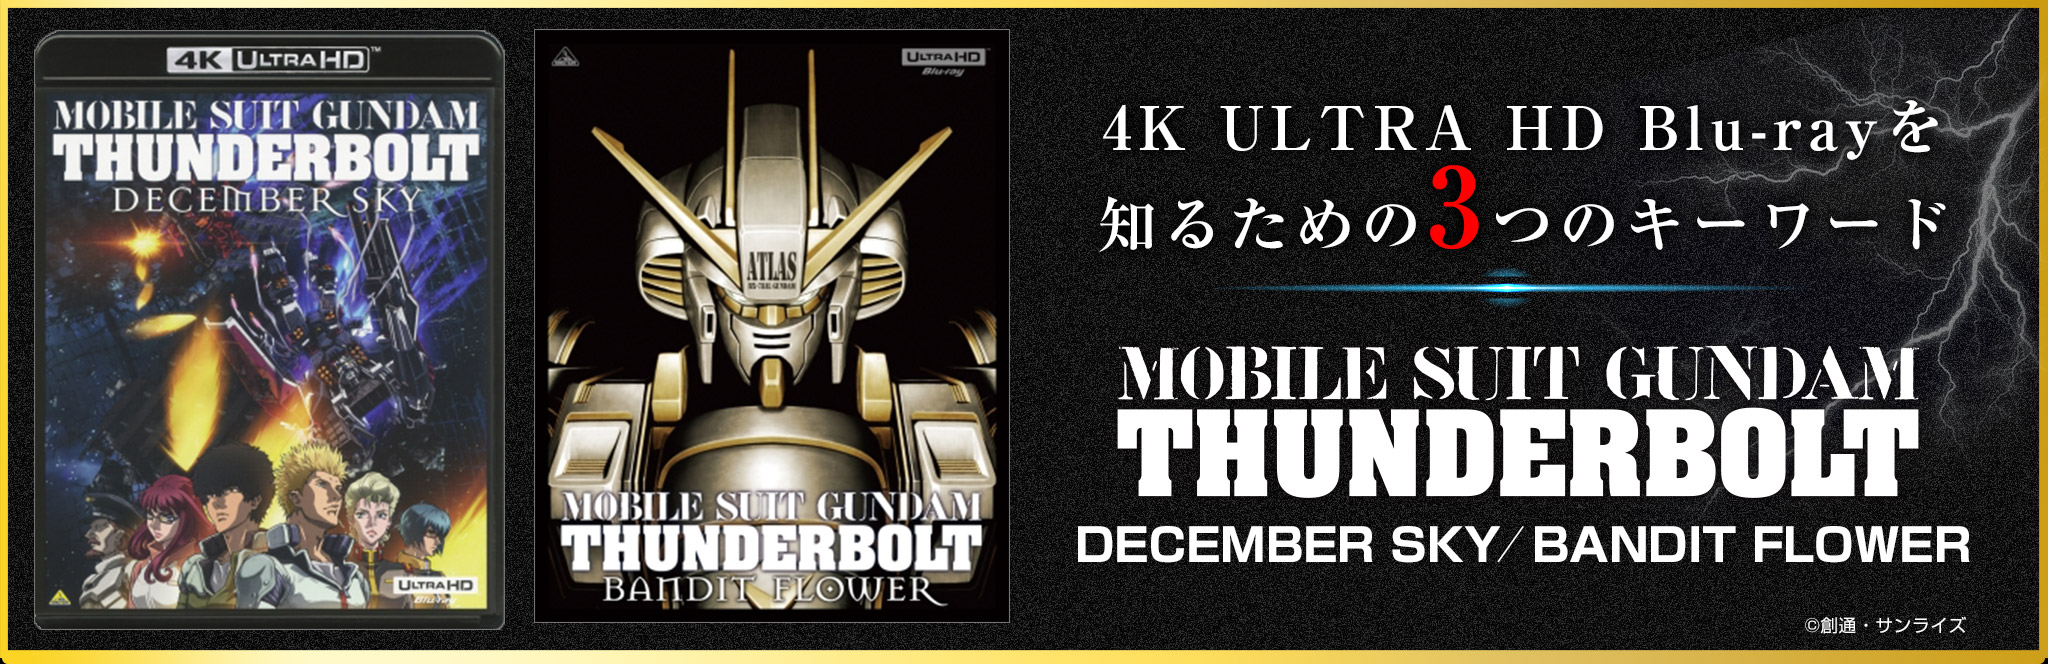 4K ULTRA HD Blu-rayを知るための3つのキーワード『機動戦士ガンダム サンダーボルト』